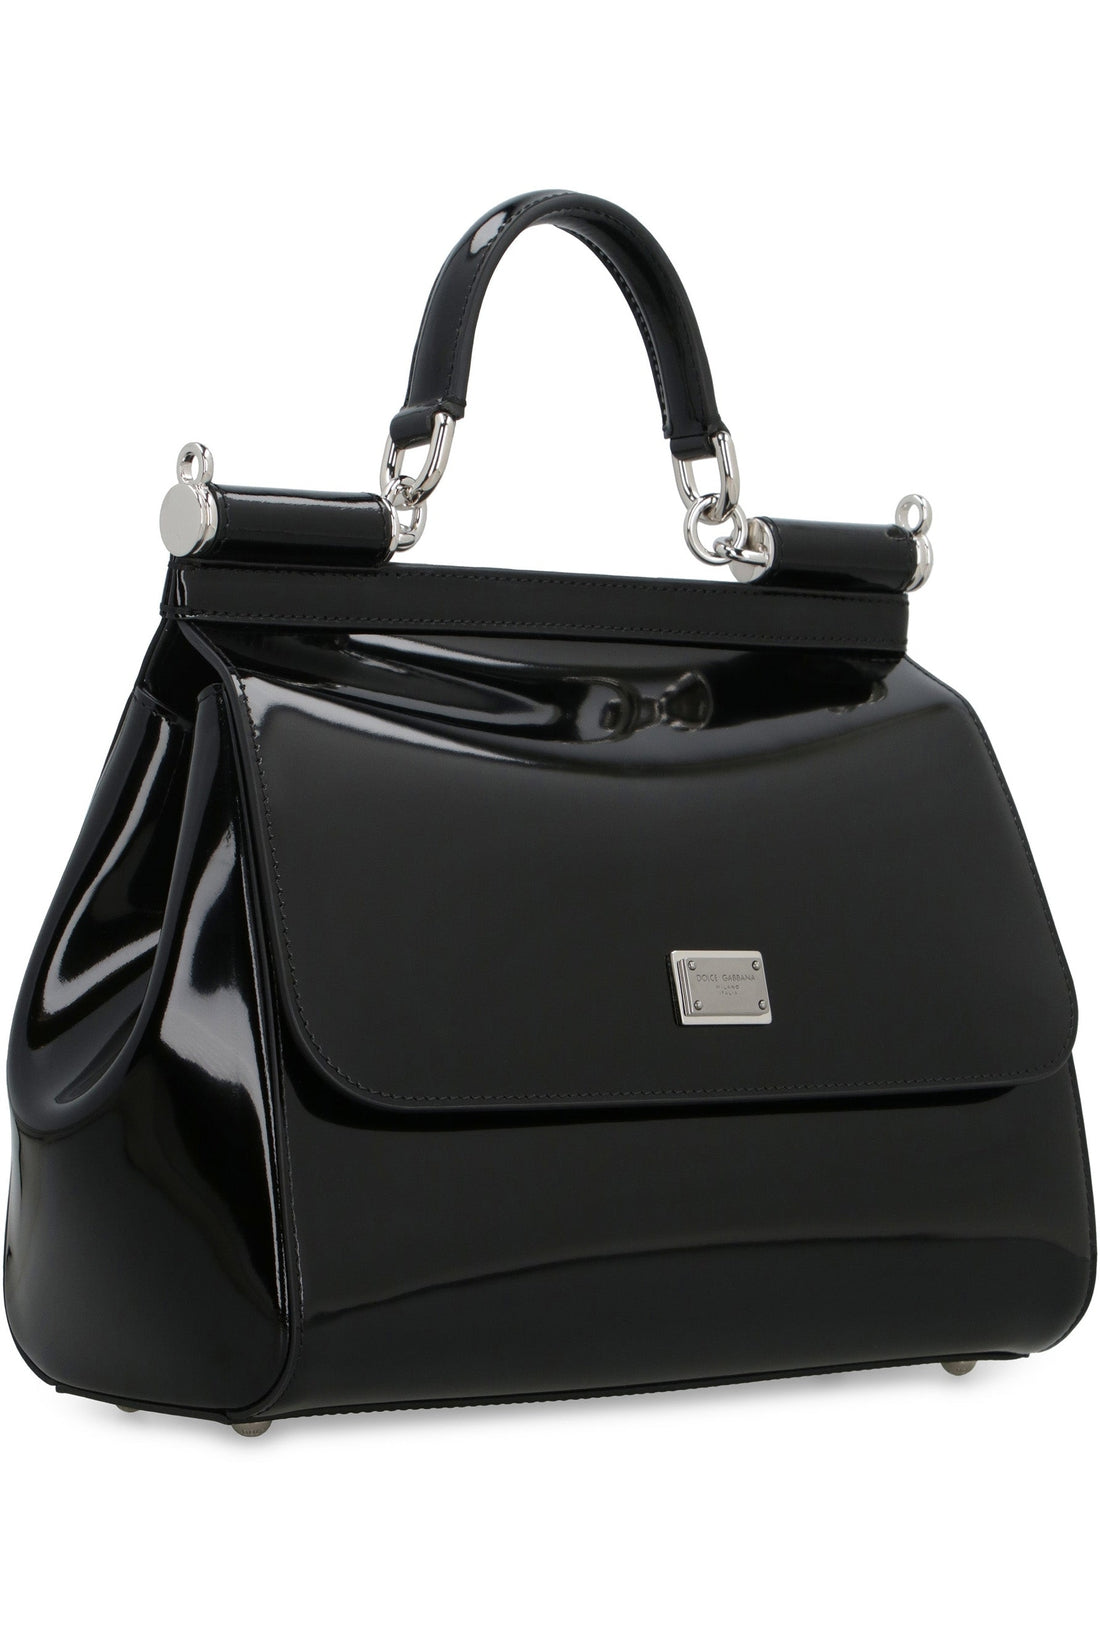 Dolce & Gabbana-OUTLET-SALE-KIM DOLCE&GABBANA - Sicily leather handbag-ARCHIVIST